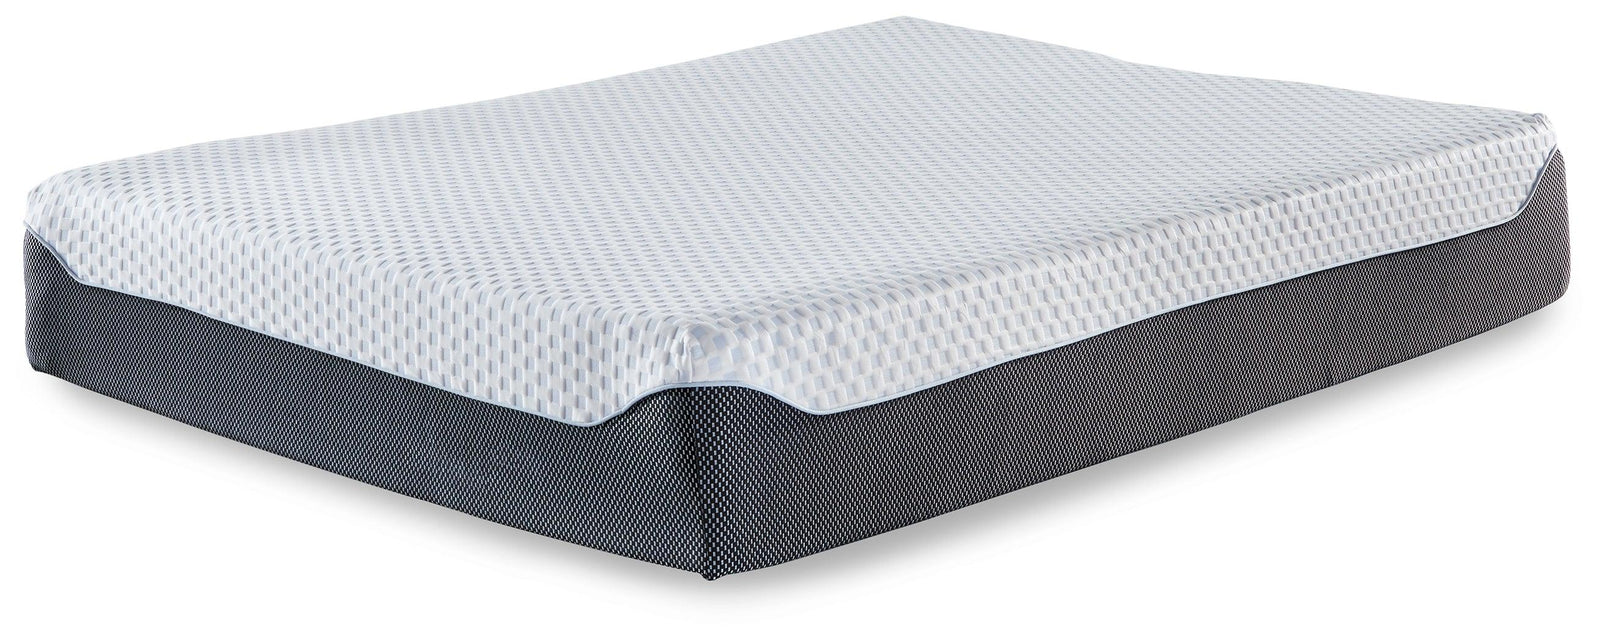 12 Inch Chime Elite White/Gray Twin Memory Foam Mattress In A Box